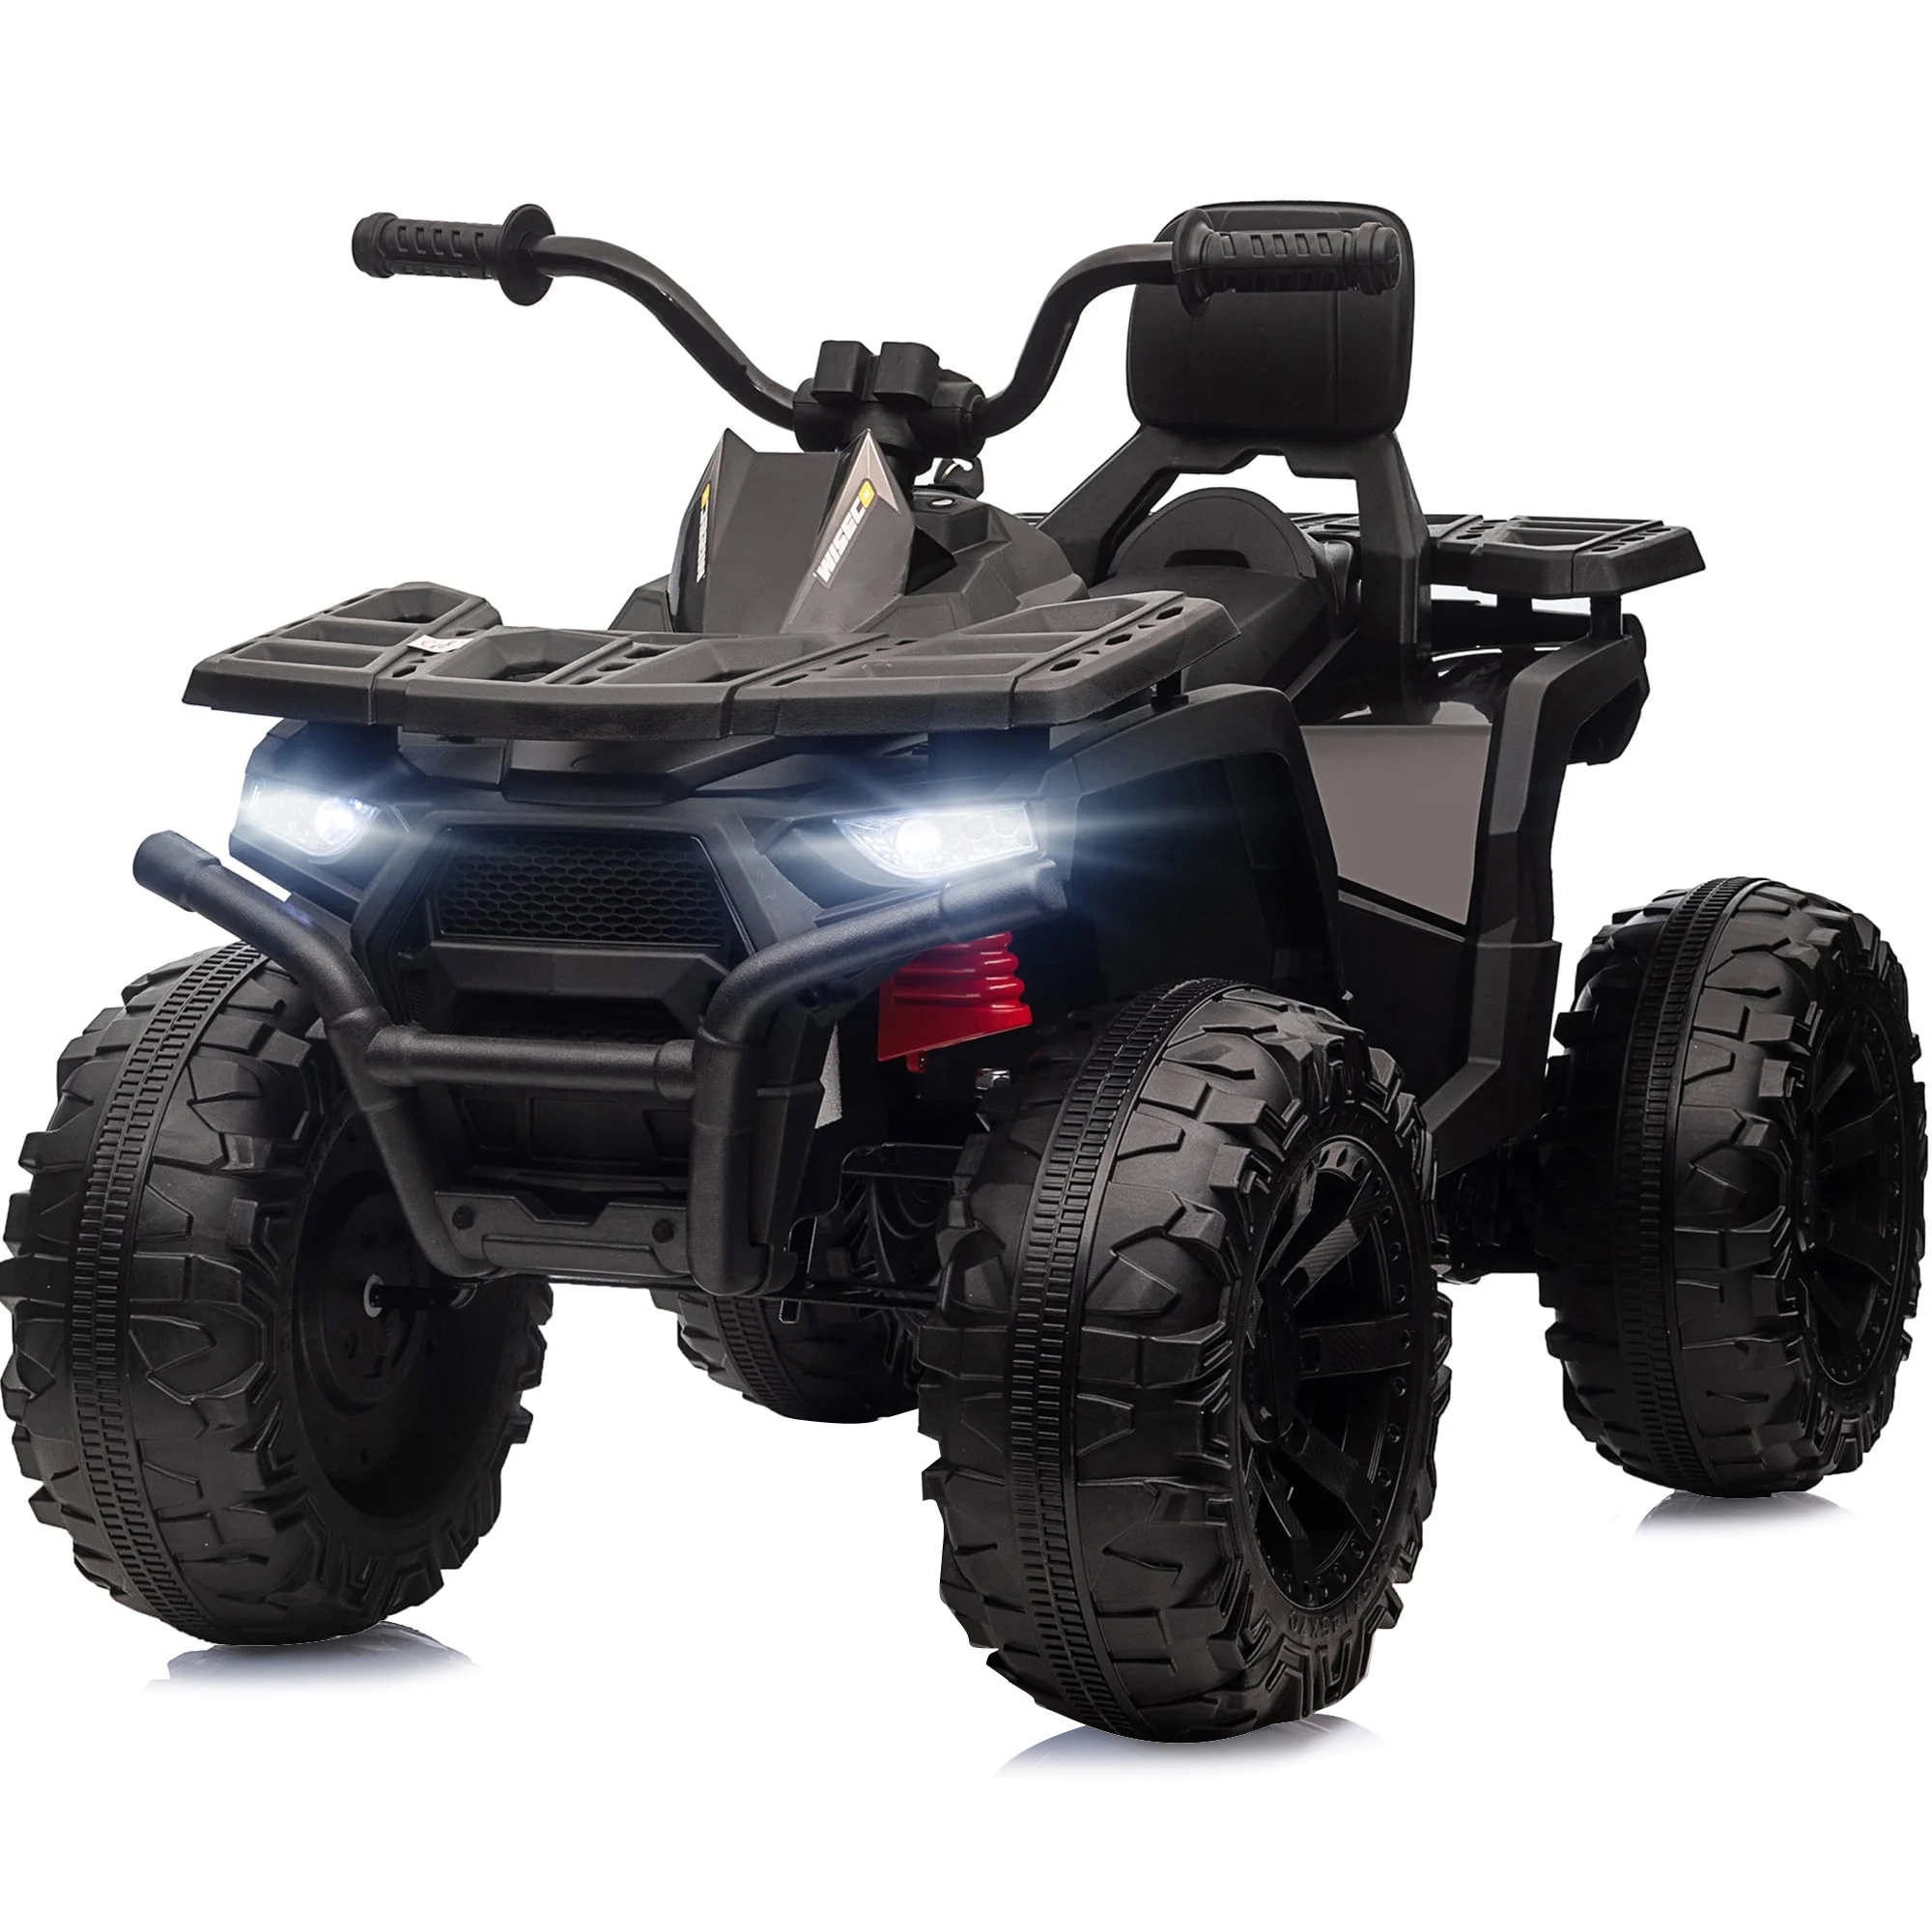 Hikiddo JC333 24V Ride on Toy, Kids ATV 4-Wheeler with 400W Motor, 2 Seater - Black - image 1 of 9